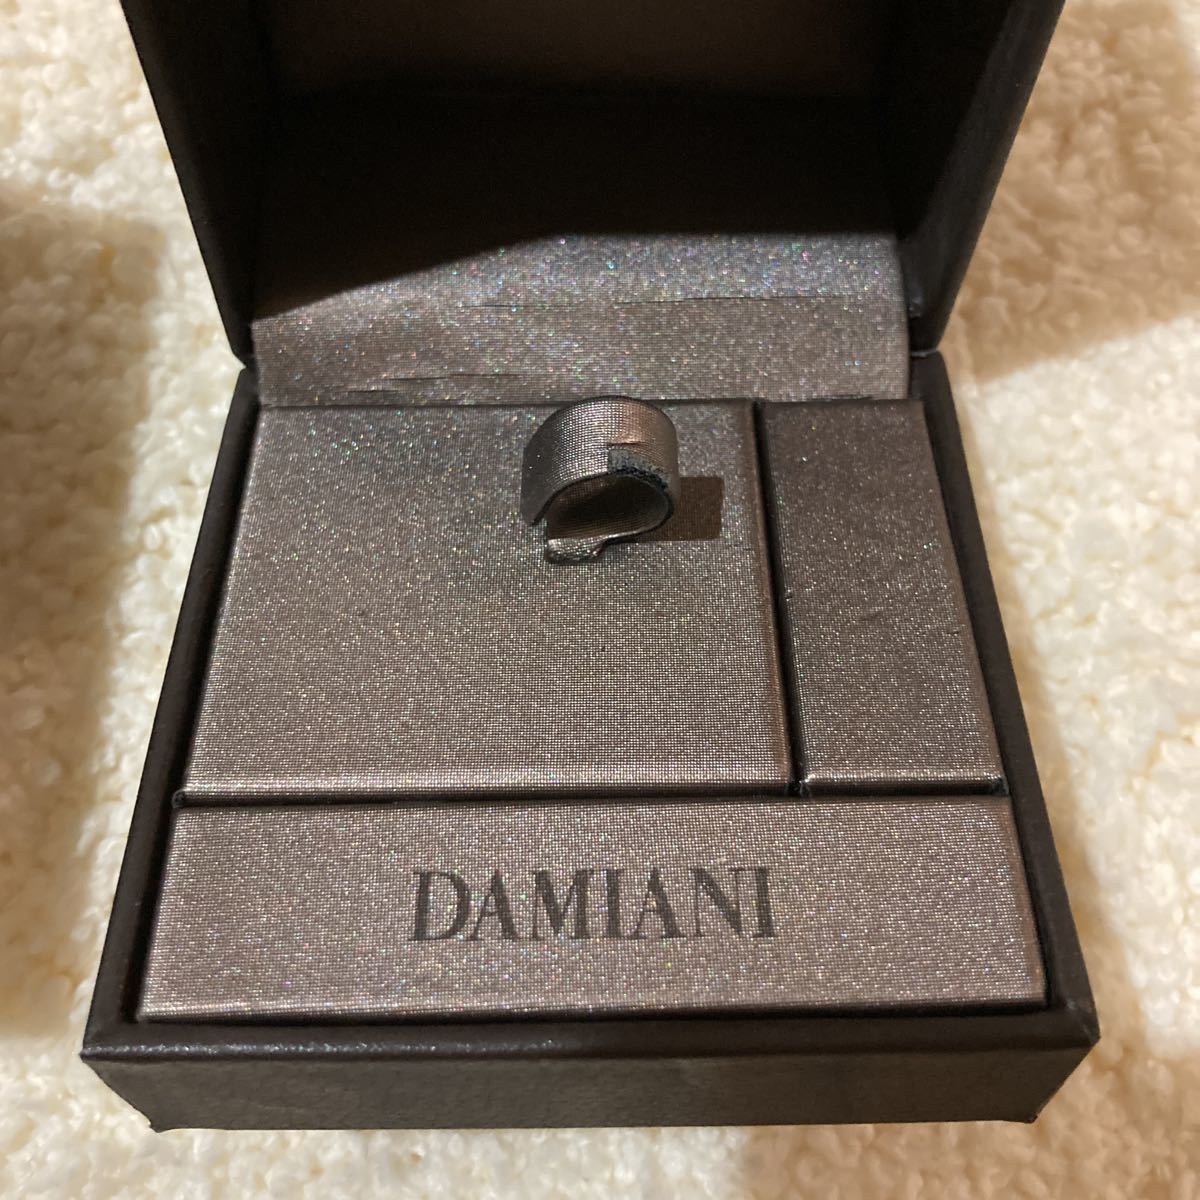  Damiani DAMIANI кольцо кольцо пустой коробка box кейс пустой коробка коробка кольцо кейс кольцо кейс аксессуары ювелирные изделия 